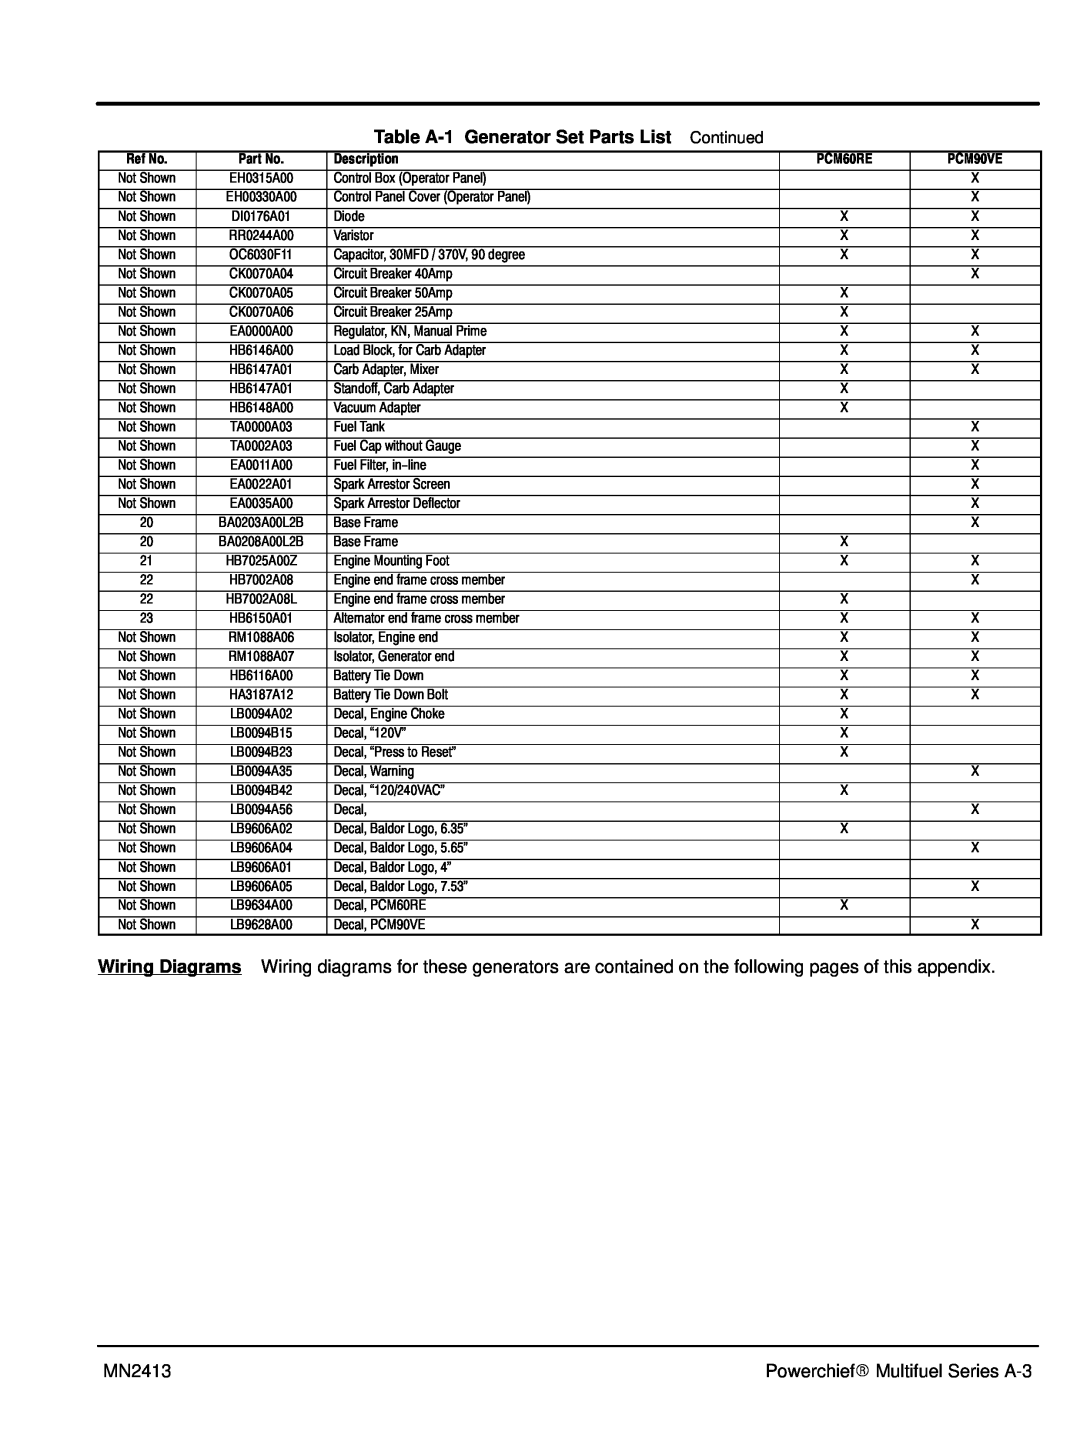 Baldor Series PC Mutlifuel manual Table A-1 Generator Set Parts List, Continued 